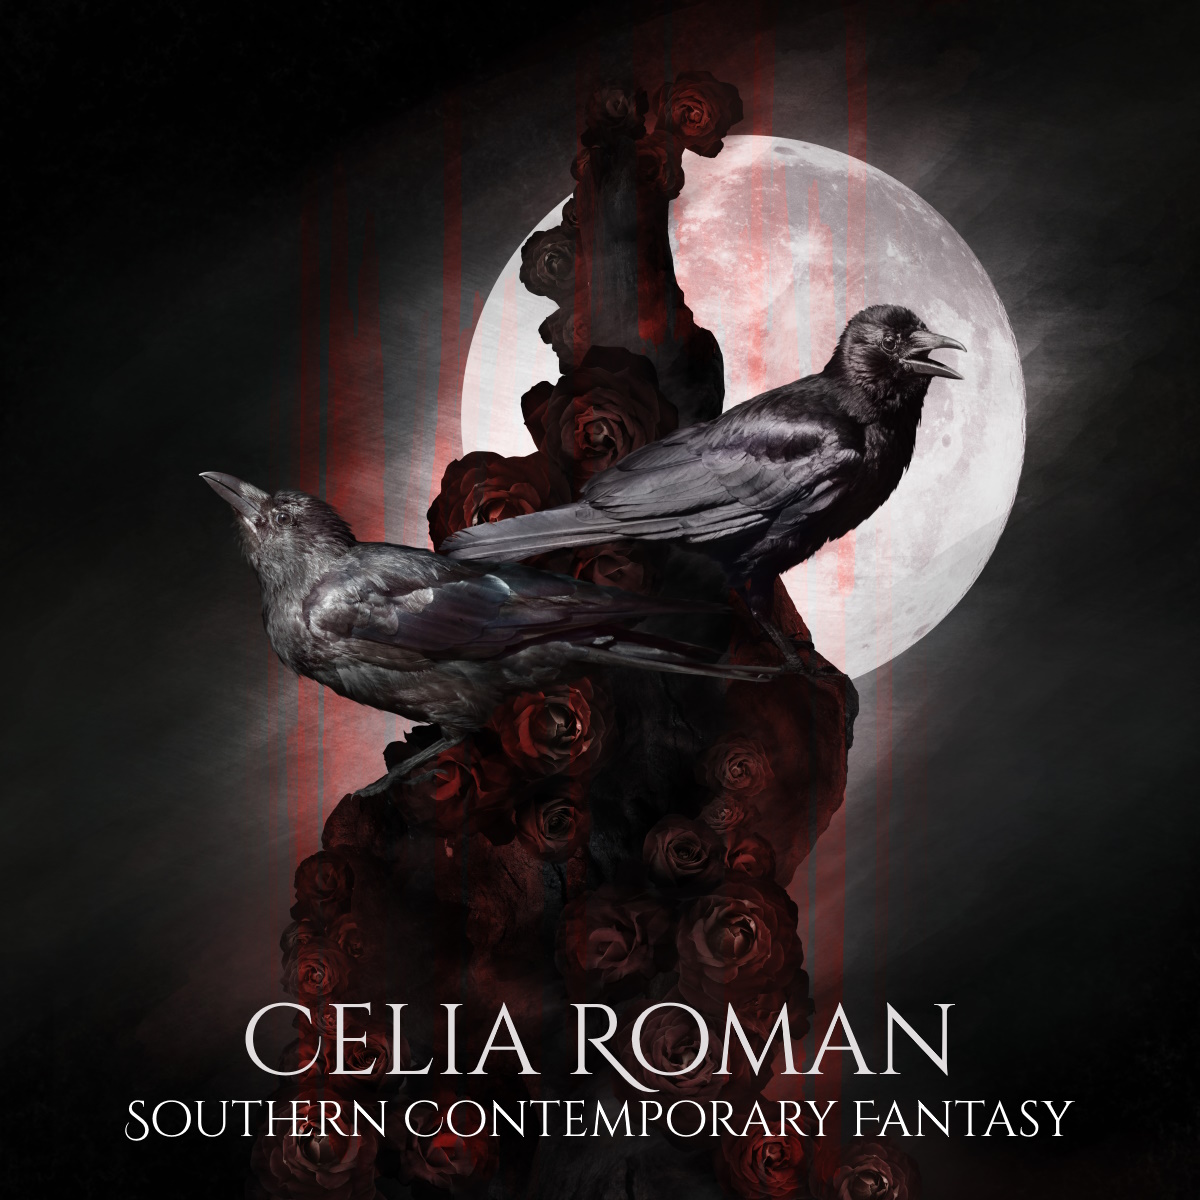 Celia Roman -- Author of Southern Contemporary Fantasy